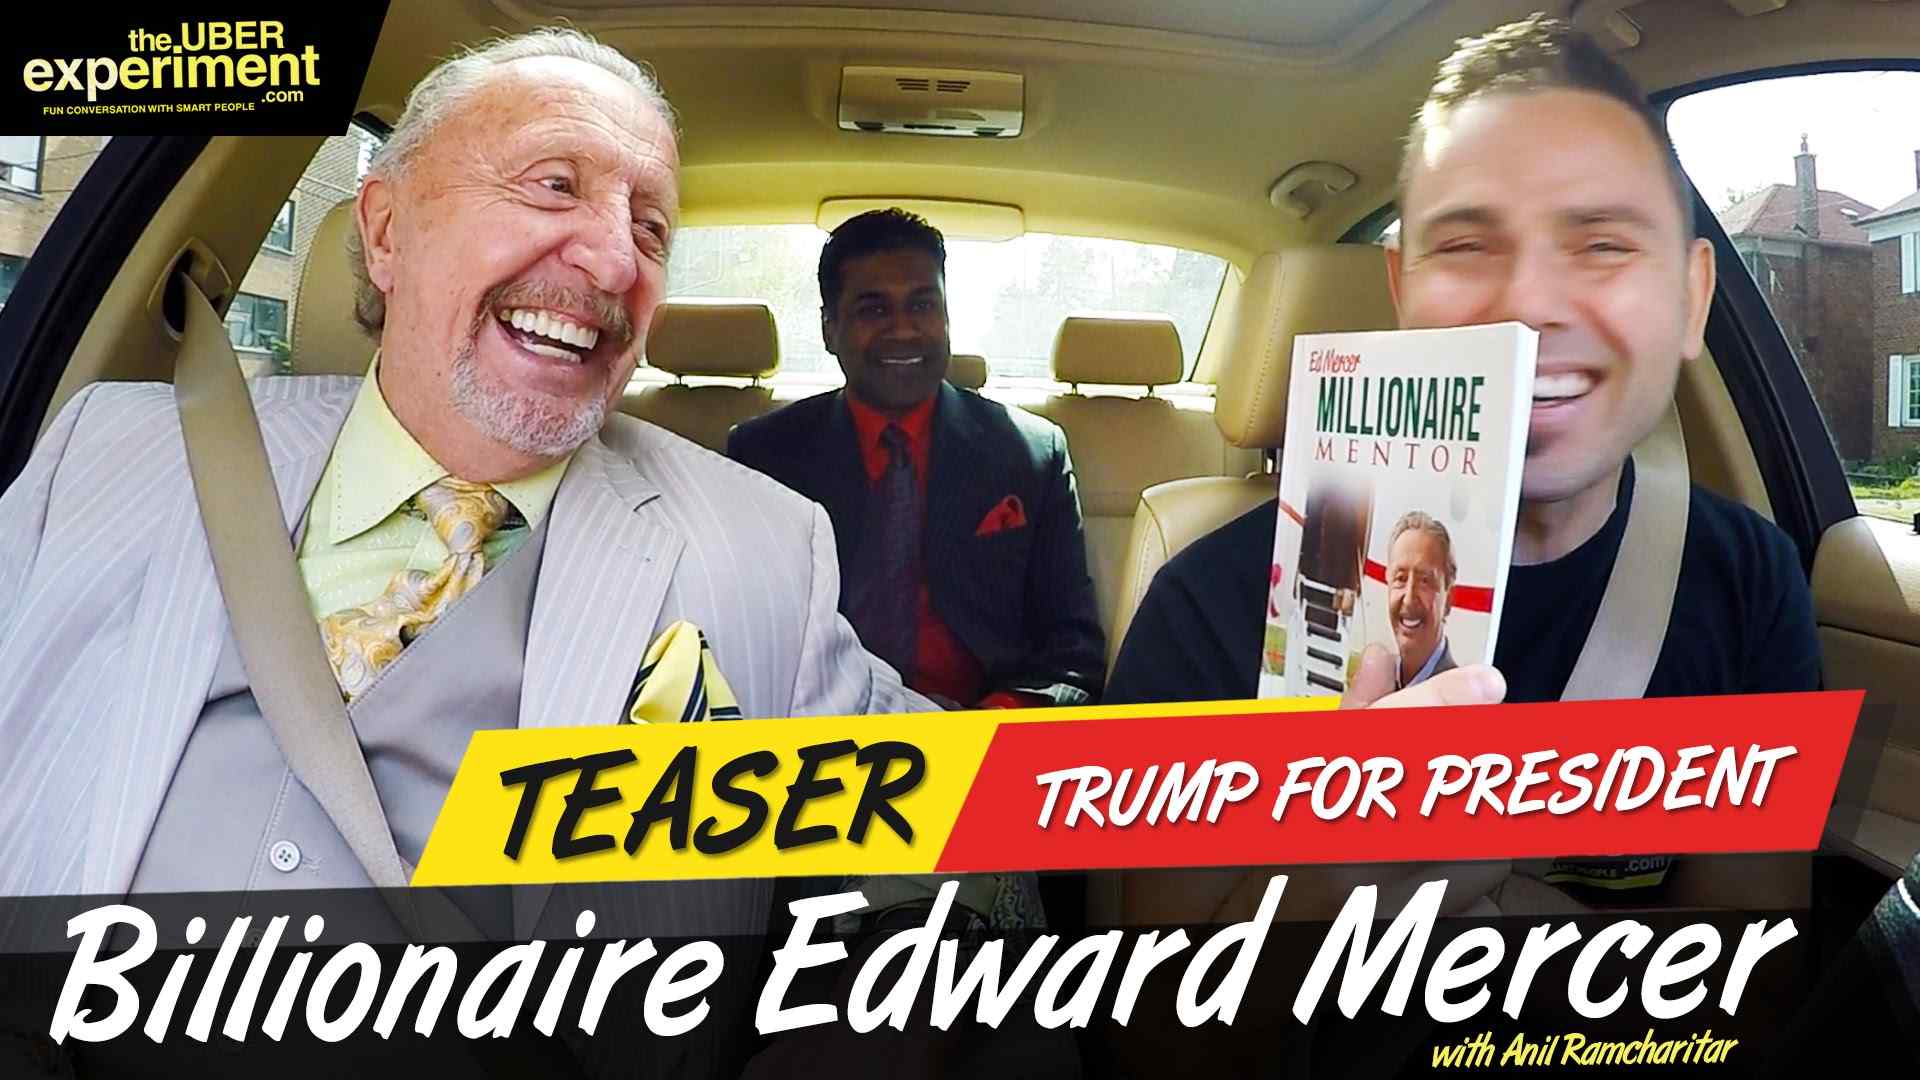 TRUMP FOR PRESIDENT - Billionaire Edward Mercer on The UBER Experiment Reality Talk Show